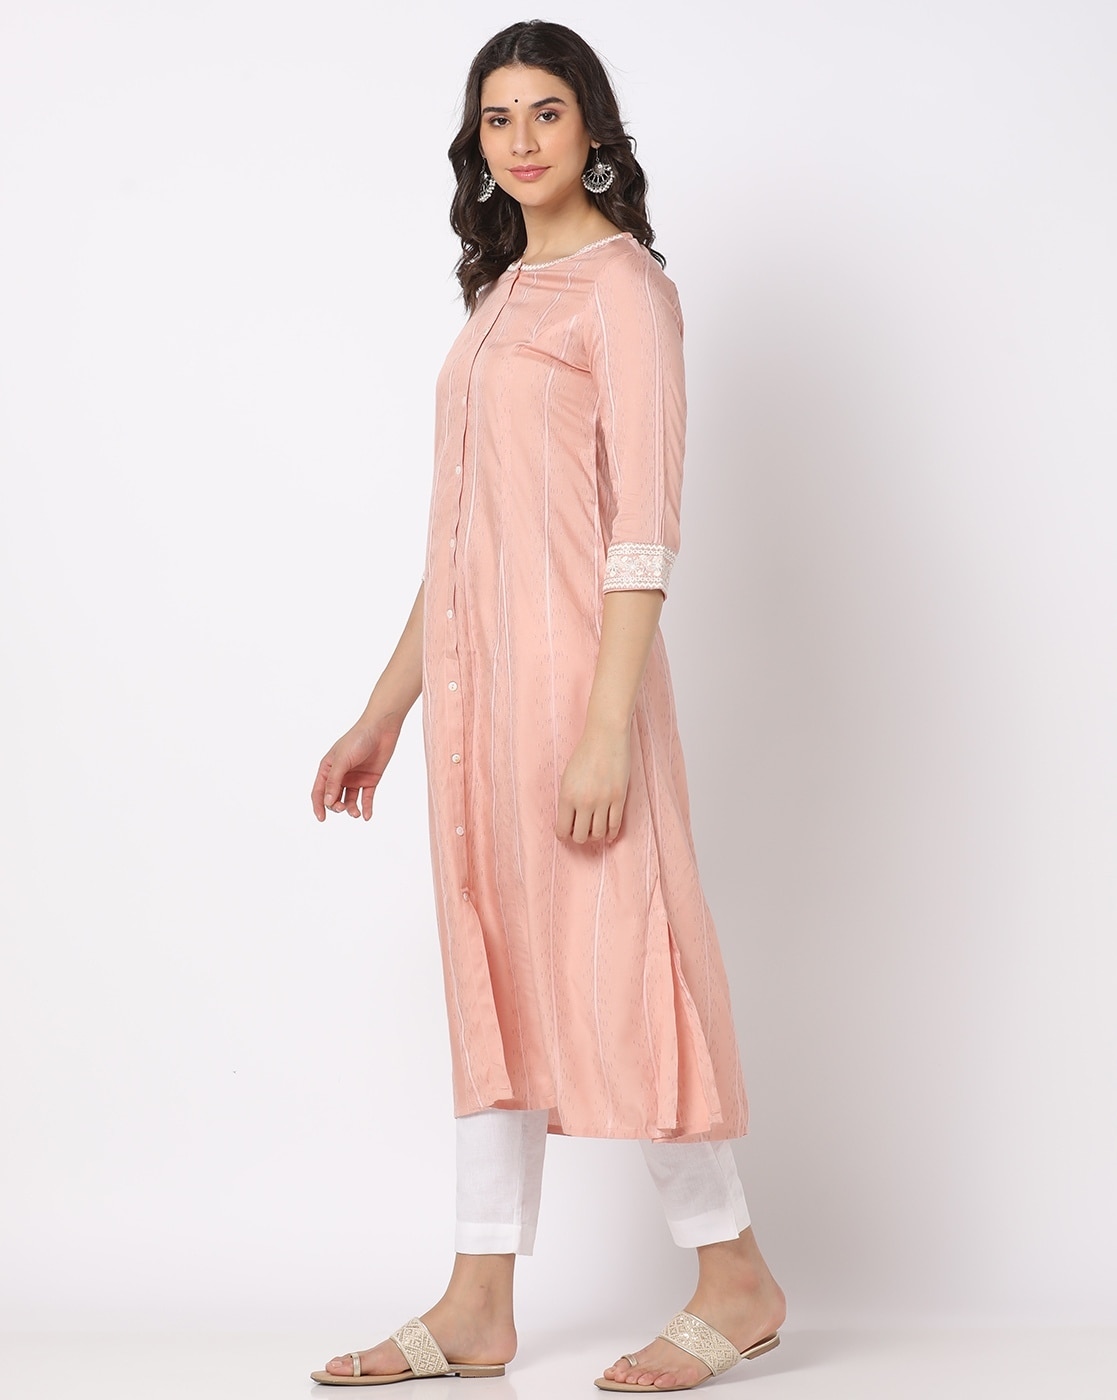 Latest 50 Net Salwar Suit Designs For Women (2022) - Tips and Beauty |  Salwar suit designs, Suit designs, Indian fashion